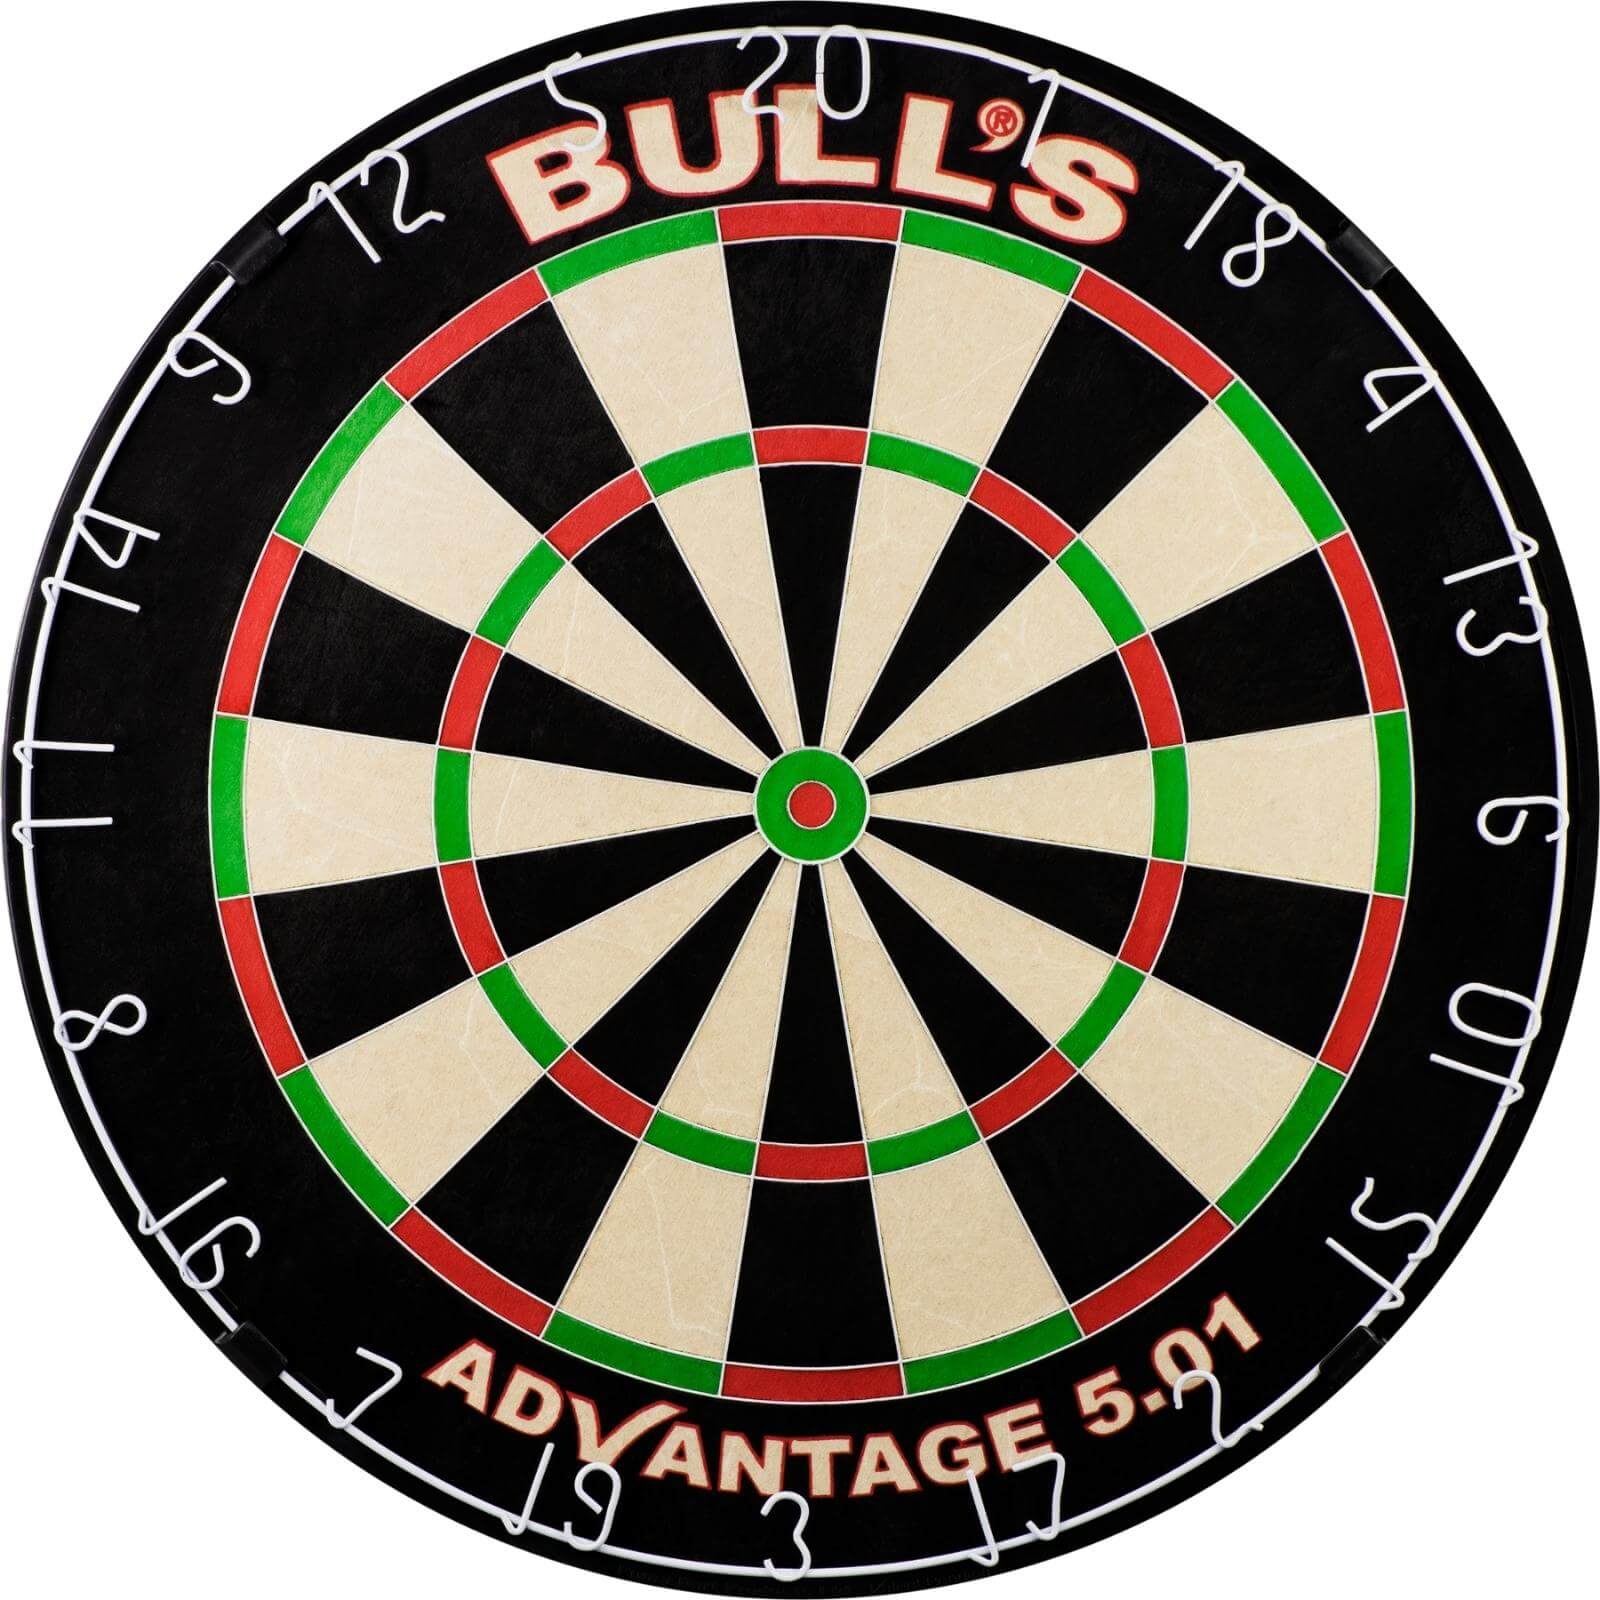 Dartboards - Bull's NL - Advantage 5.01 Dartboard 